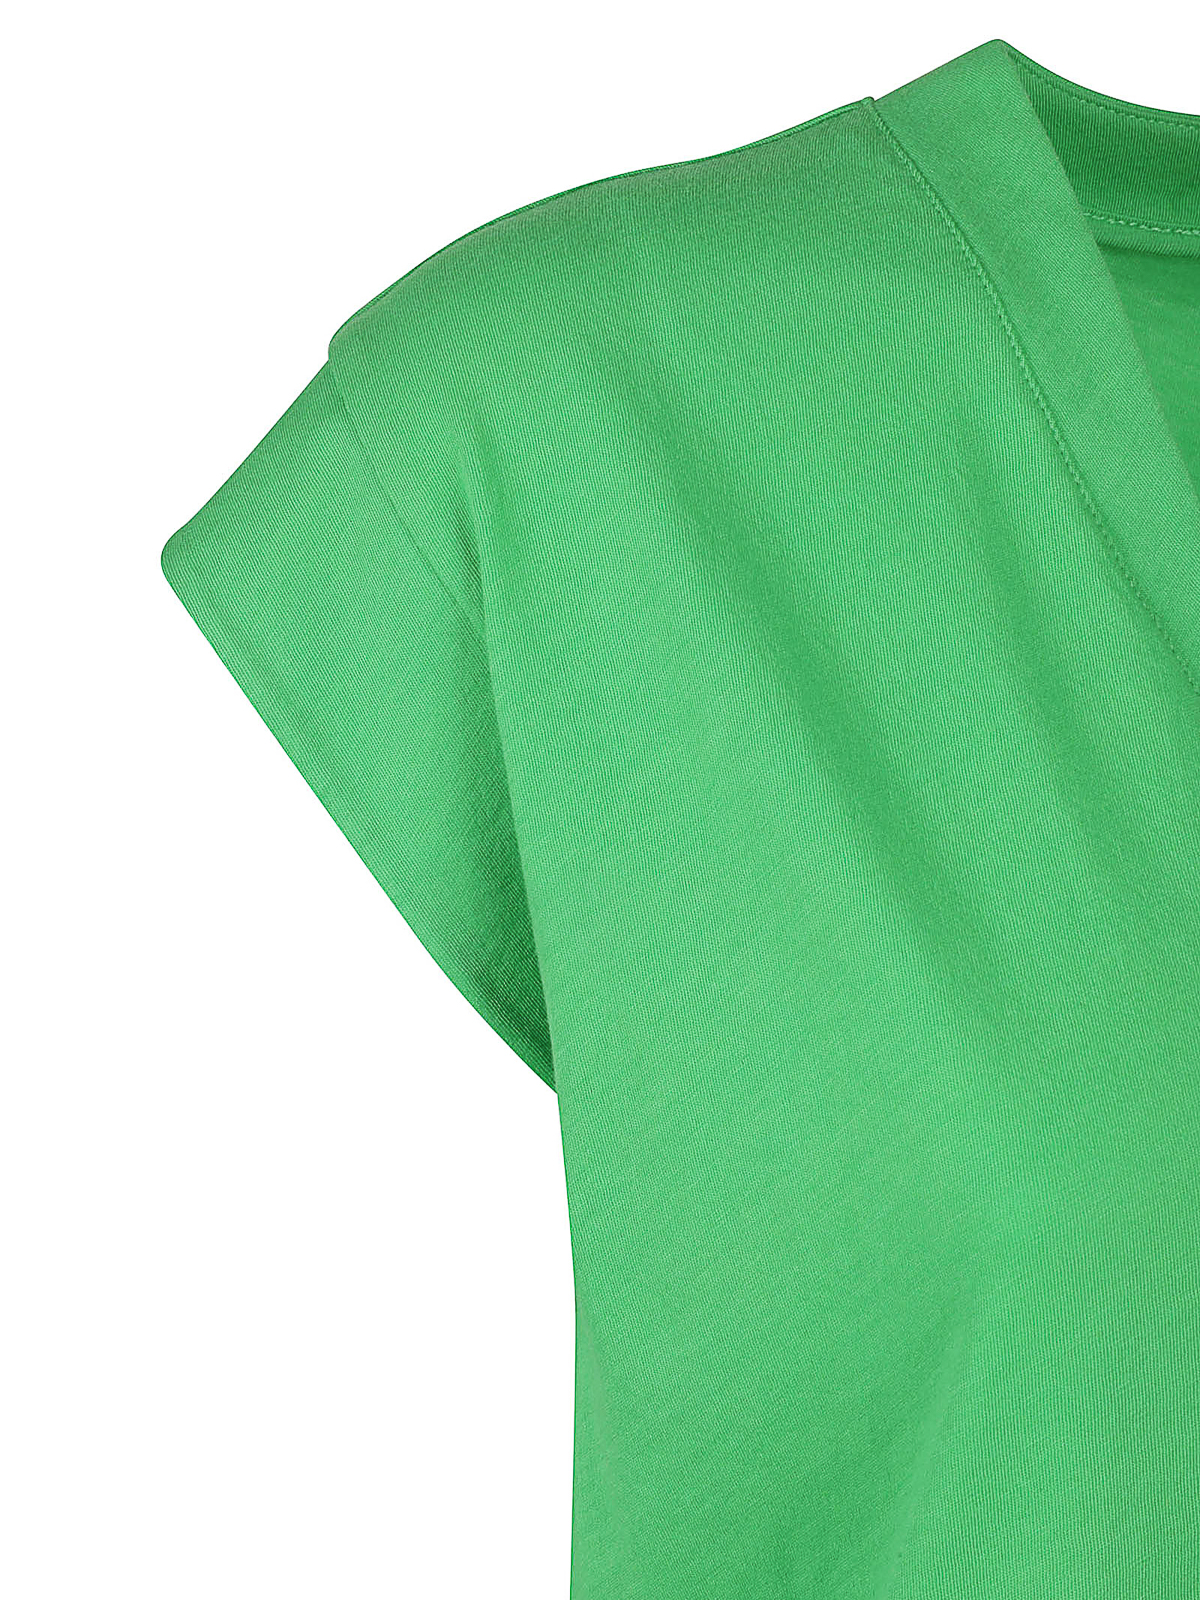 Shop Frame Camiseta - Verde In Green